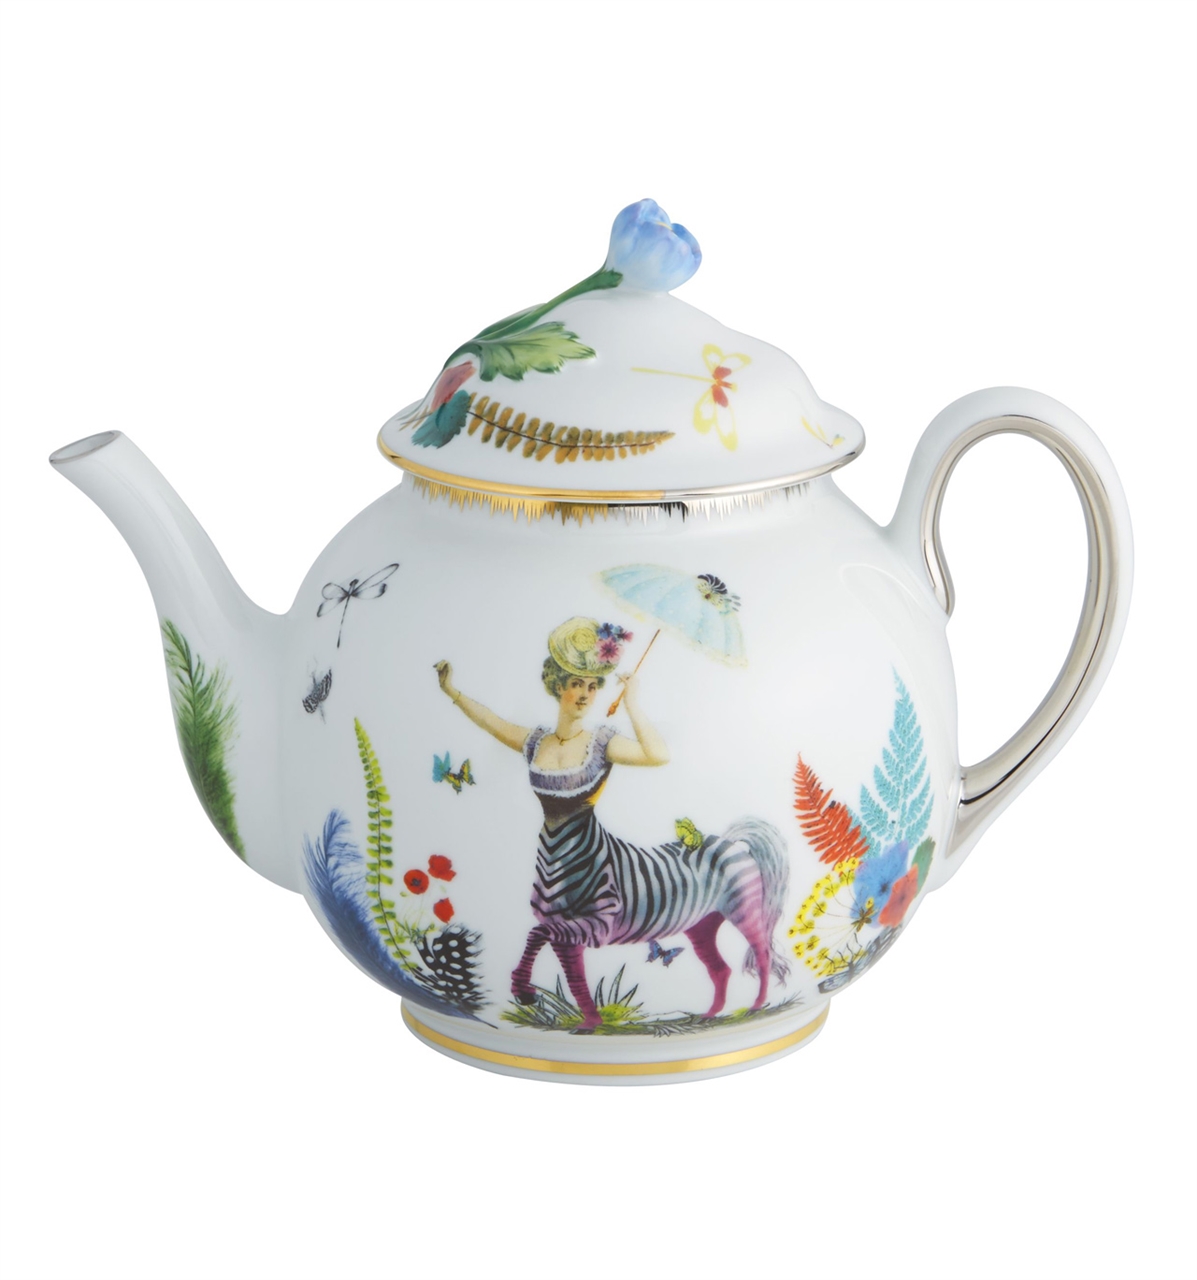 Vista Alegre Collection Caribe teapot by Christian Lacroix